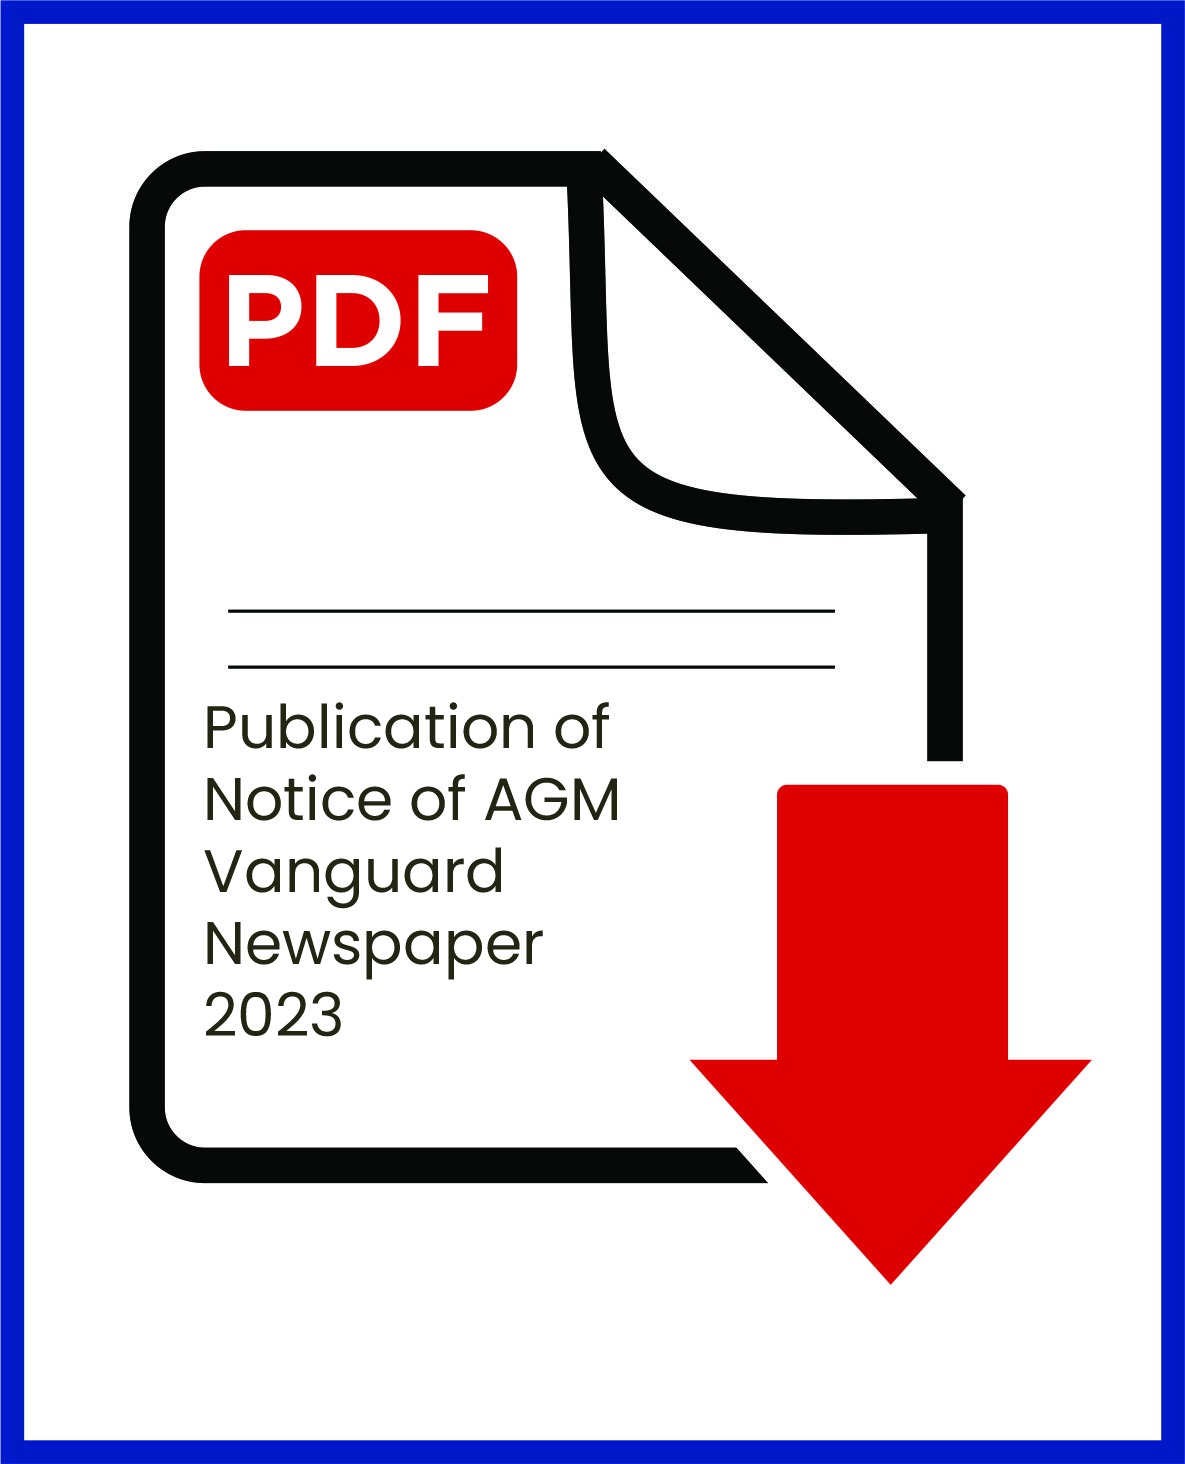 Publication of Notice of AGM - Vanguard Newspaper